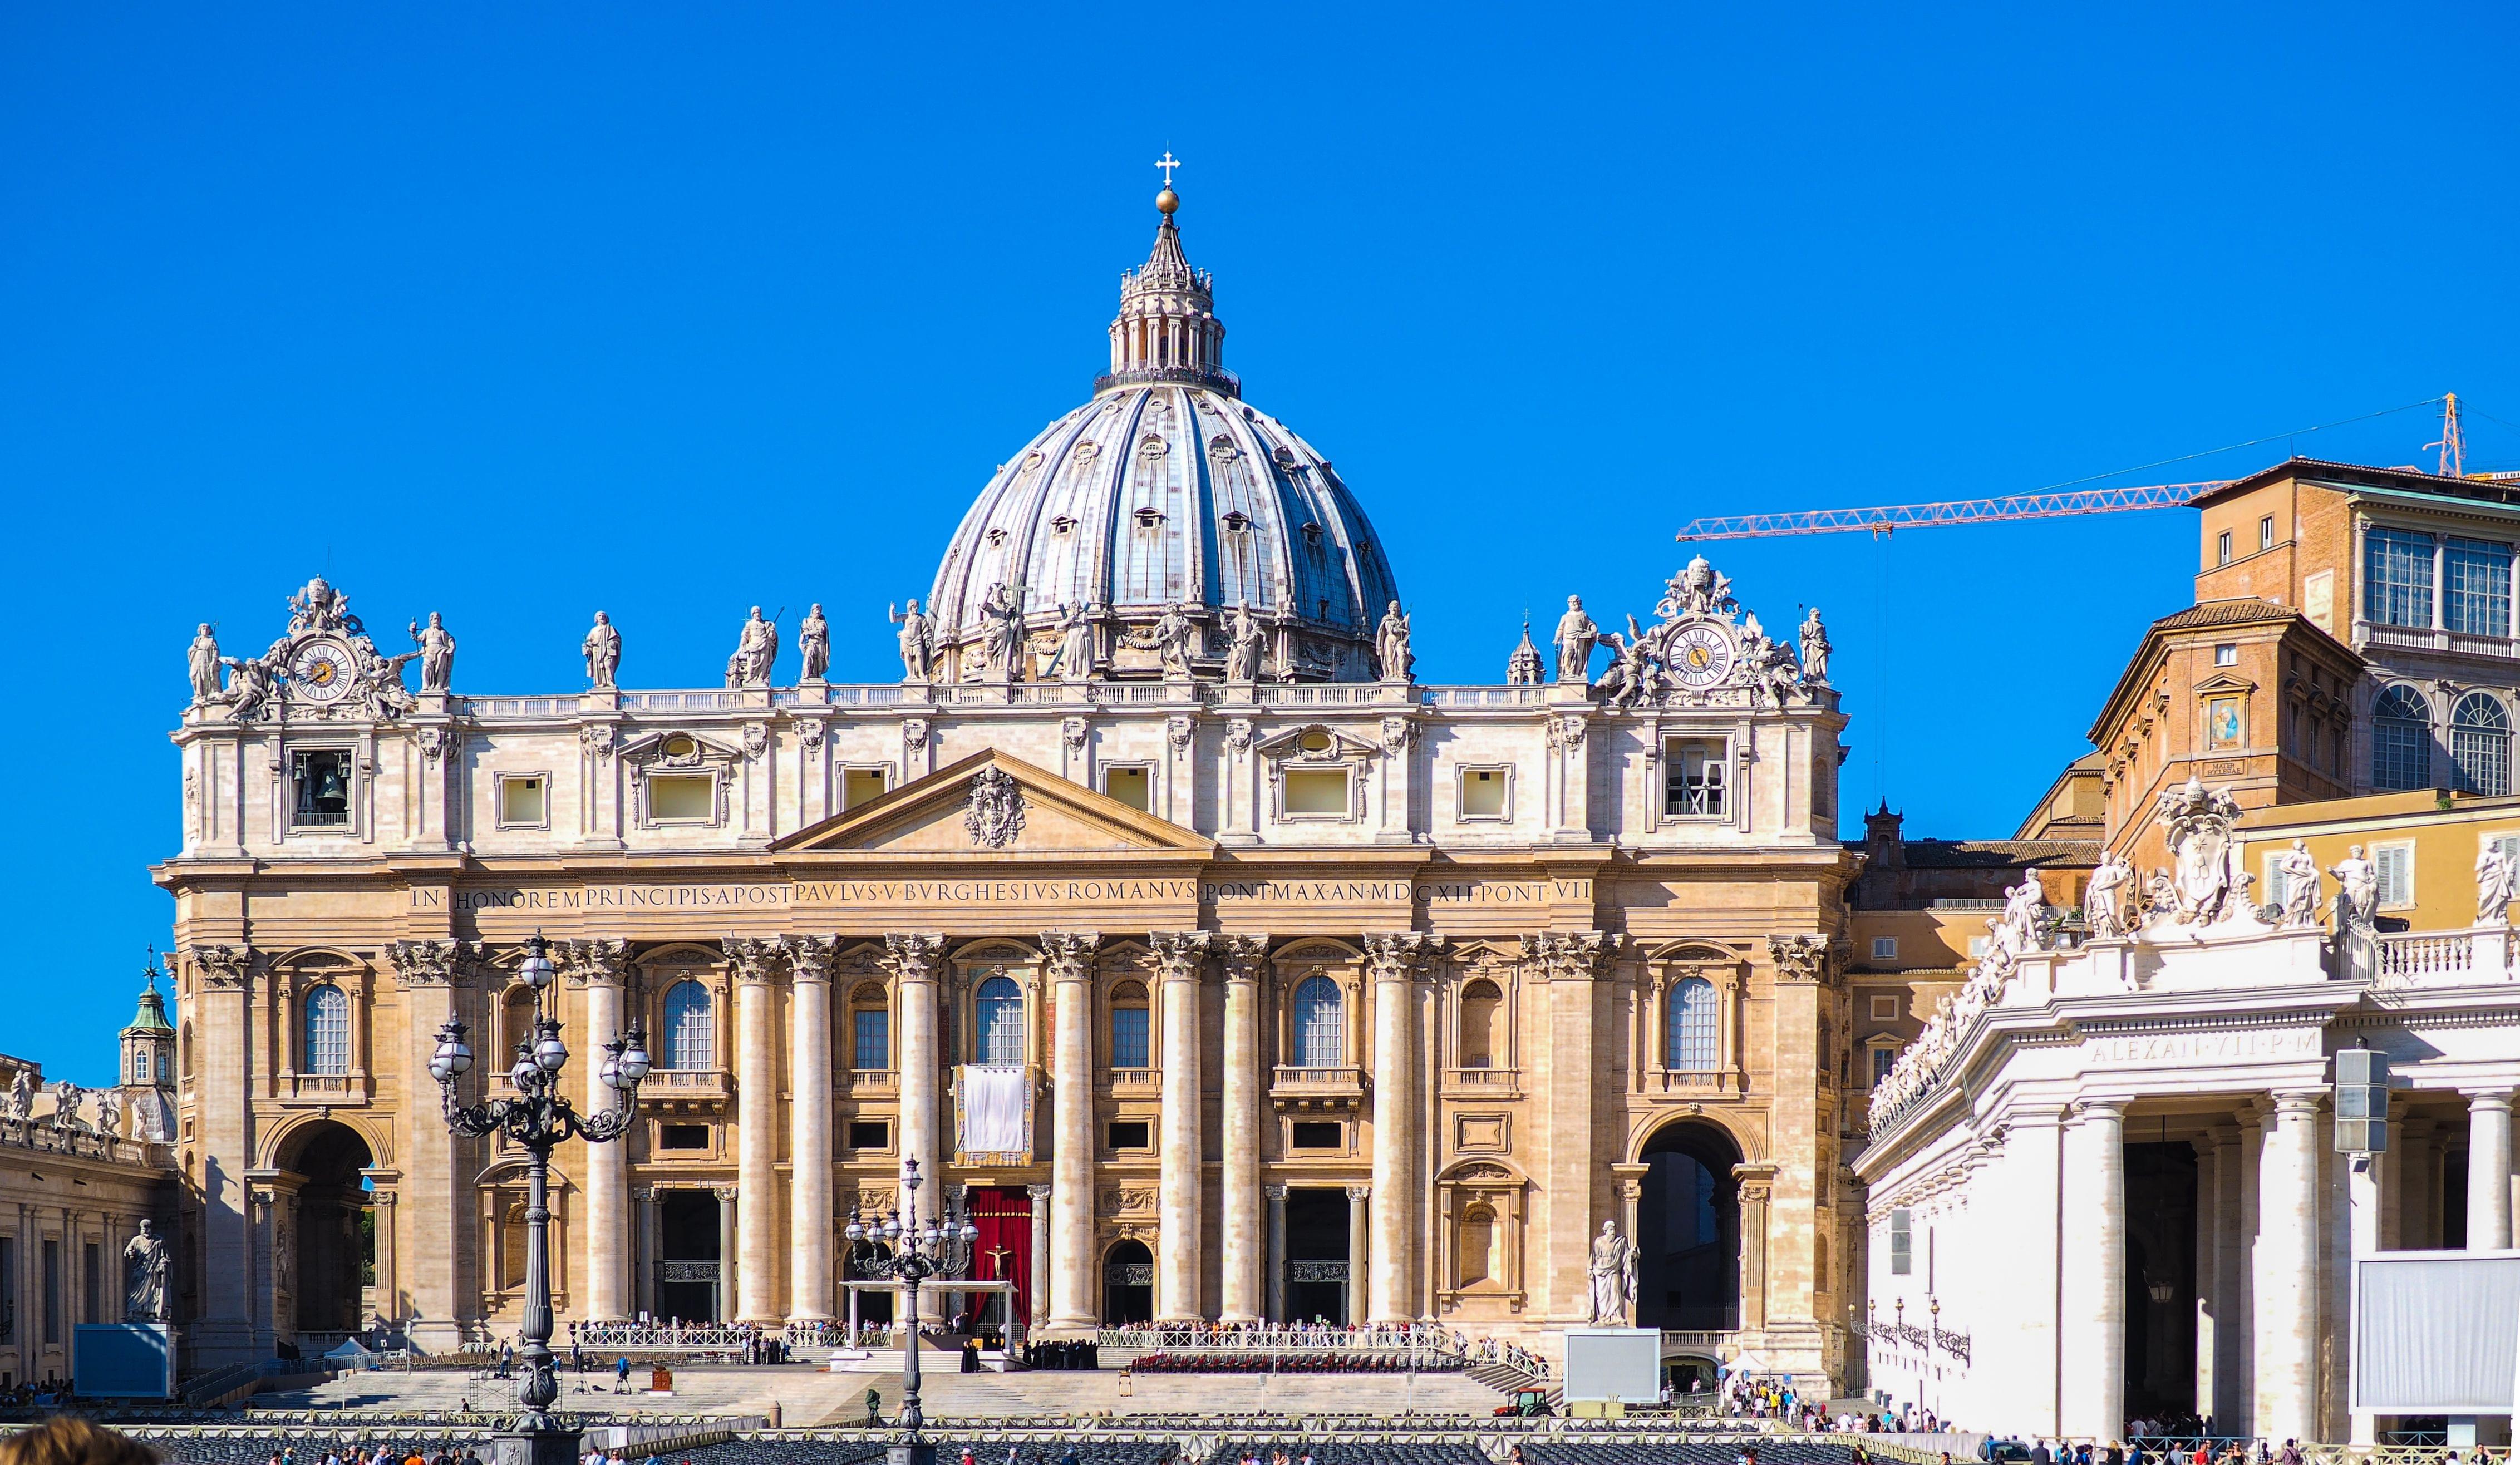 Visiting Vatican Museums